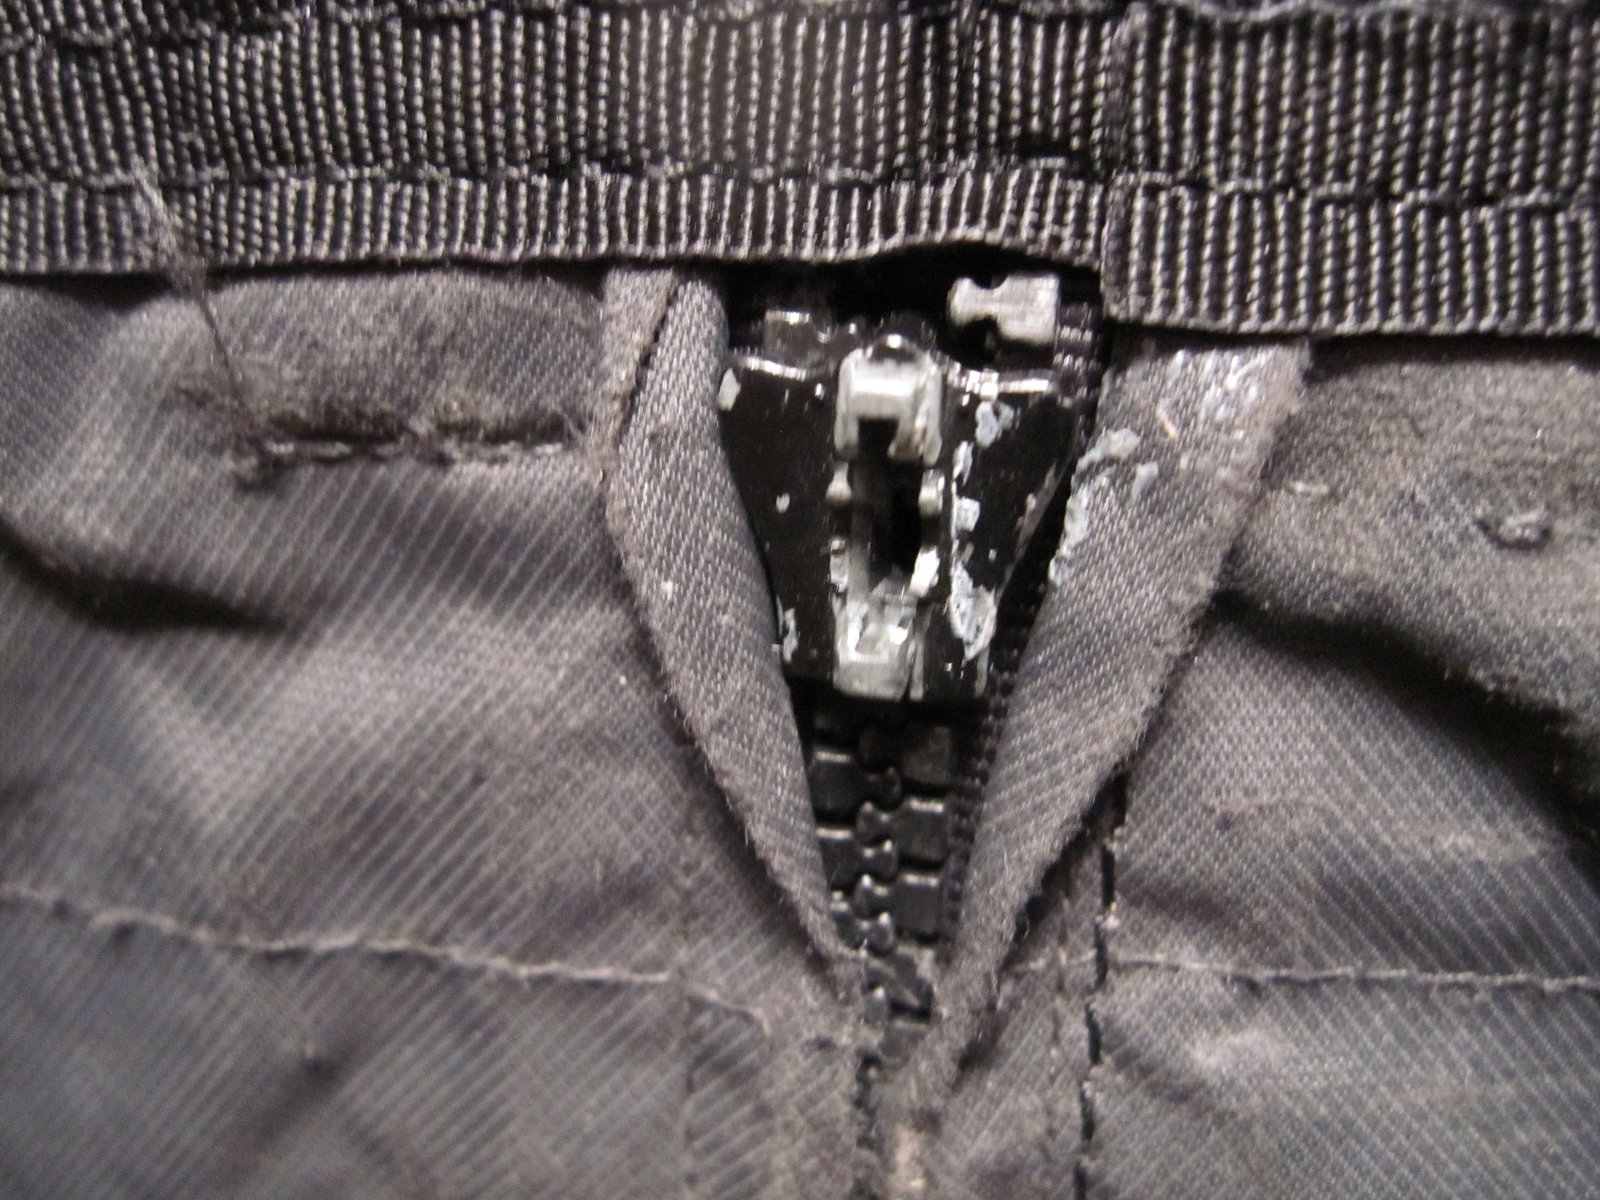 Broken zipper on FD pants (for thread)